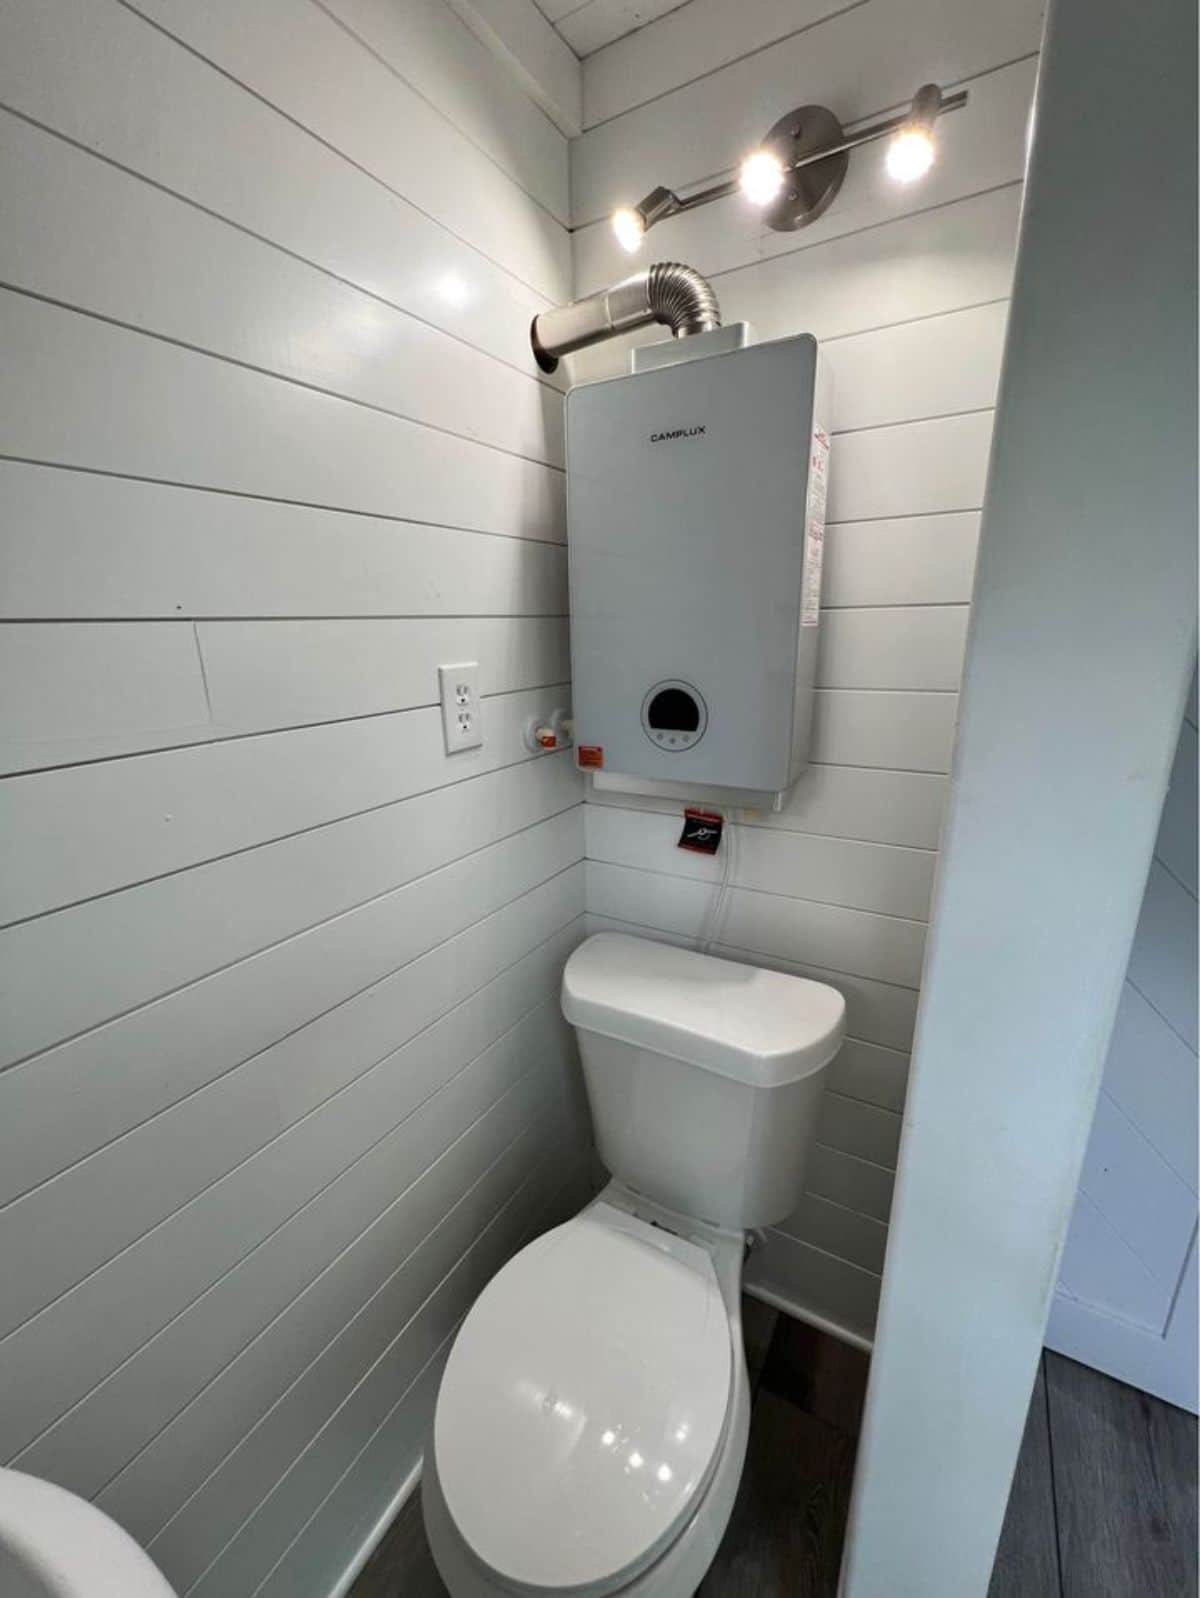 Standard toilet opposite to sink in bathroom